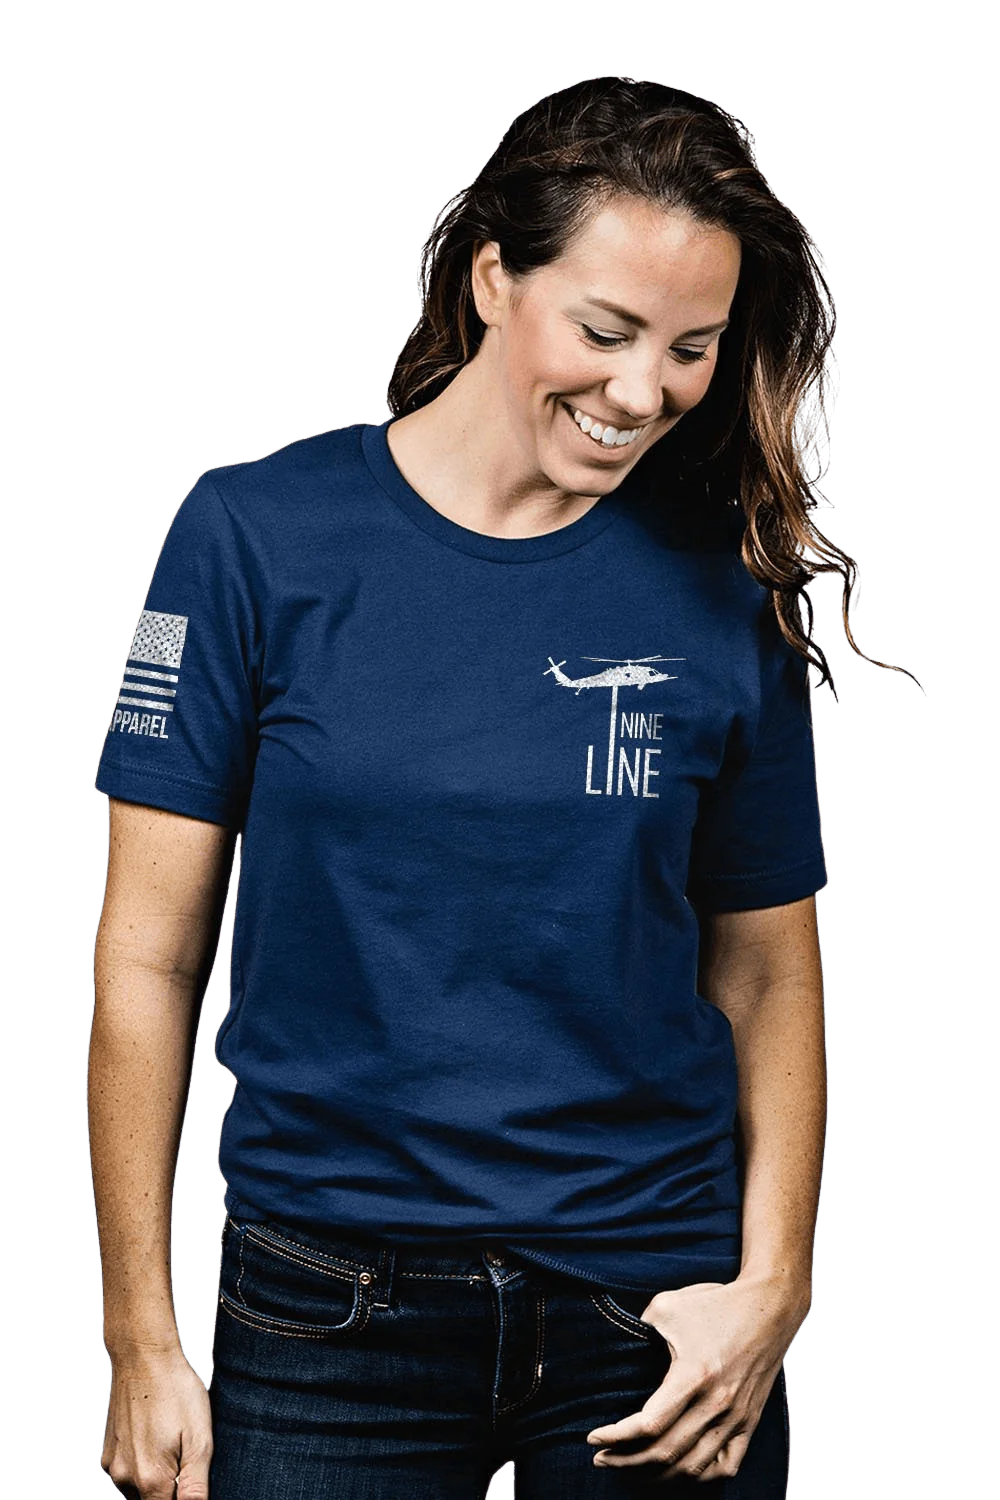 Nine Line Women's Boyfriend Fit T-Shirt - Basic Tee - Nine Line Drop posted by ProdOrigin USA in Women's Apparel 